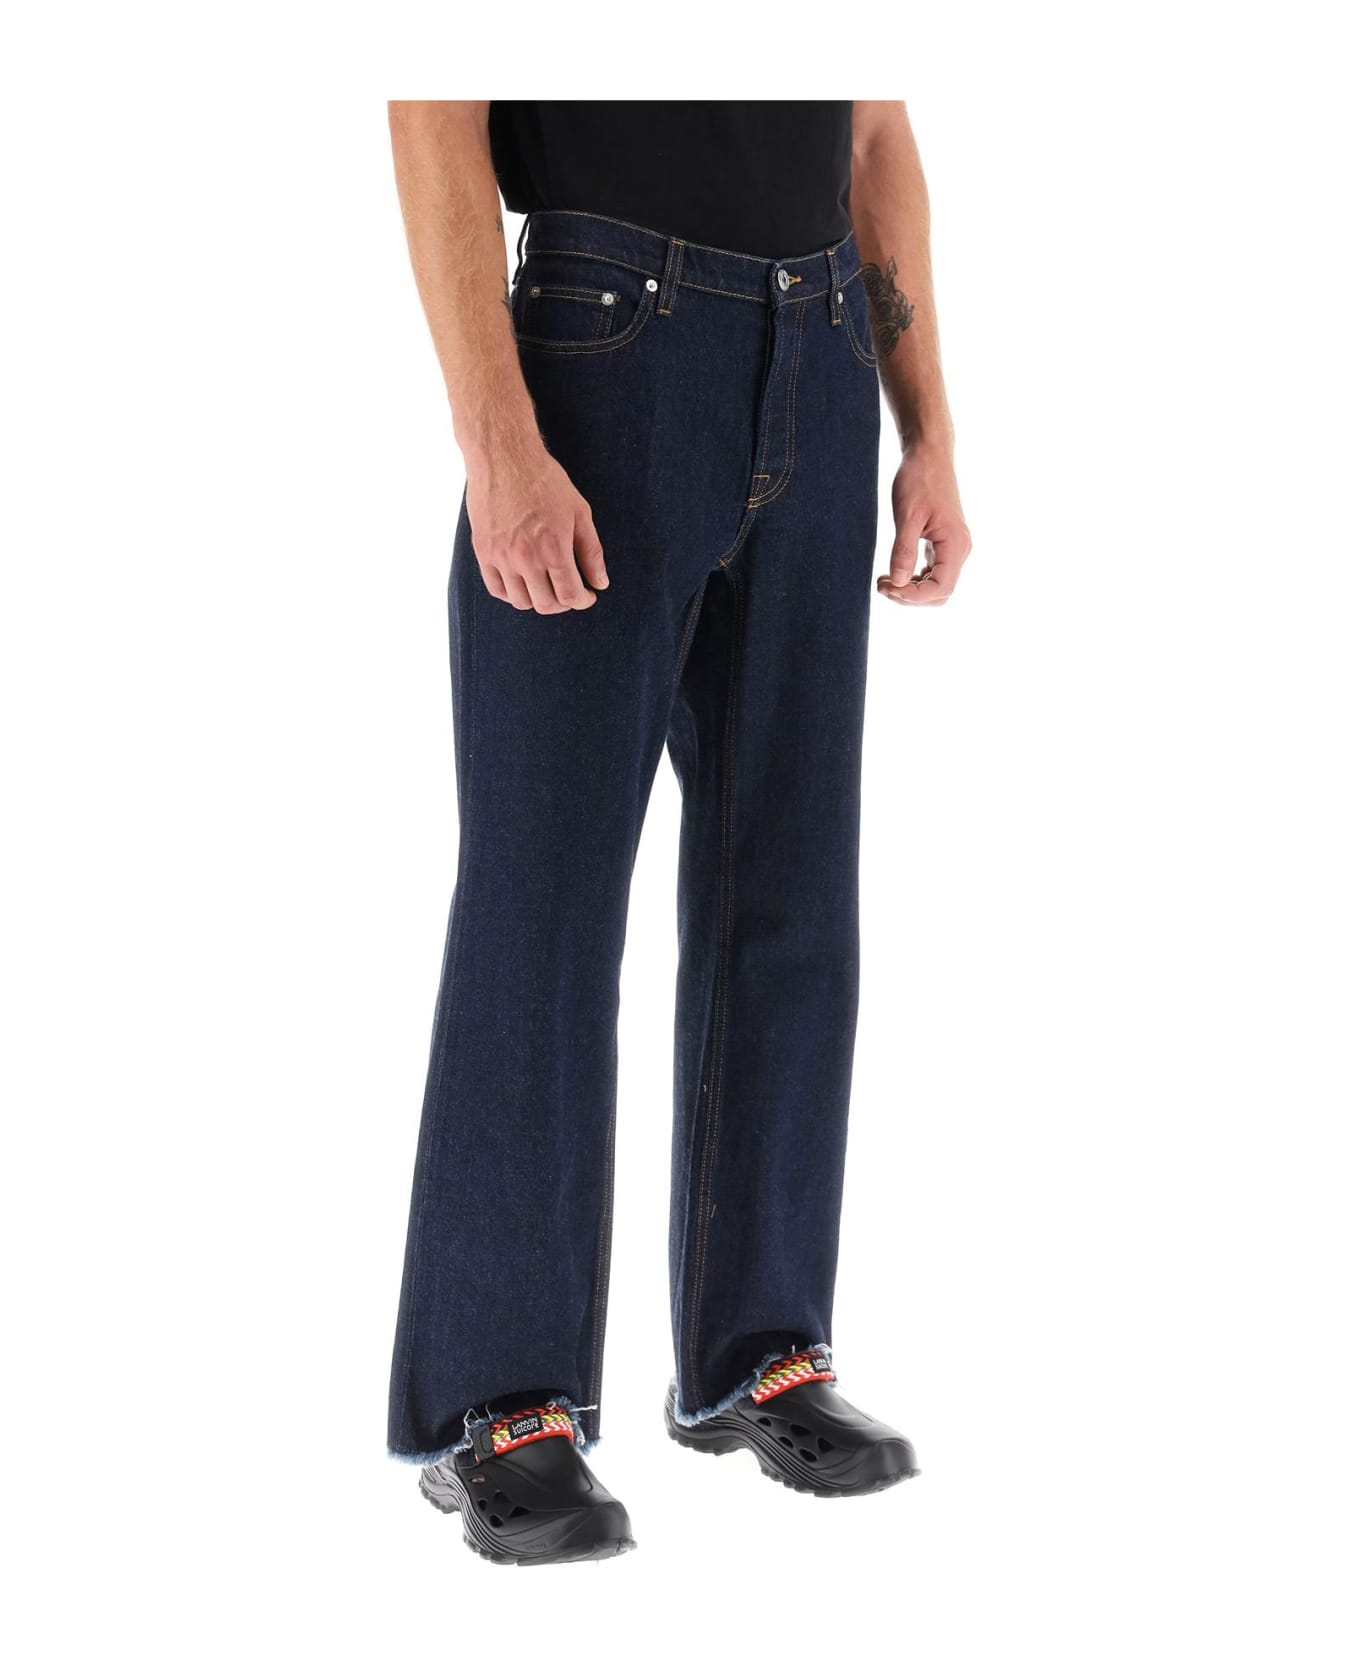 Lanvin Jeans With Frayed Hem - NAVY (Blue) デニム